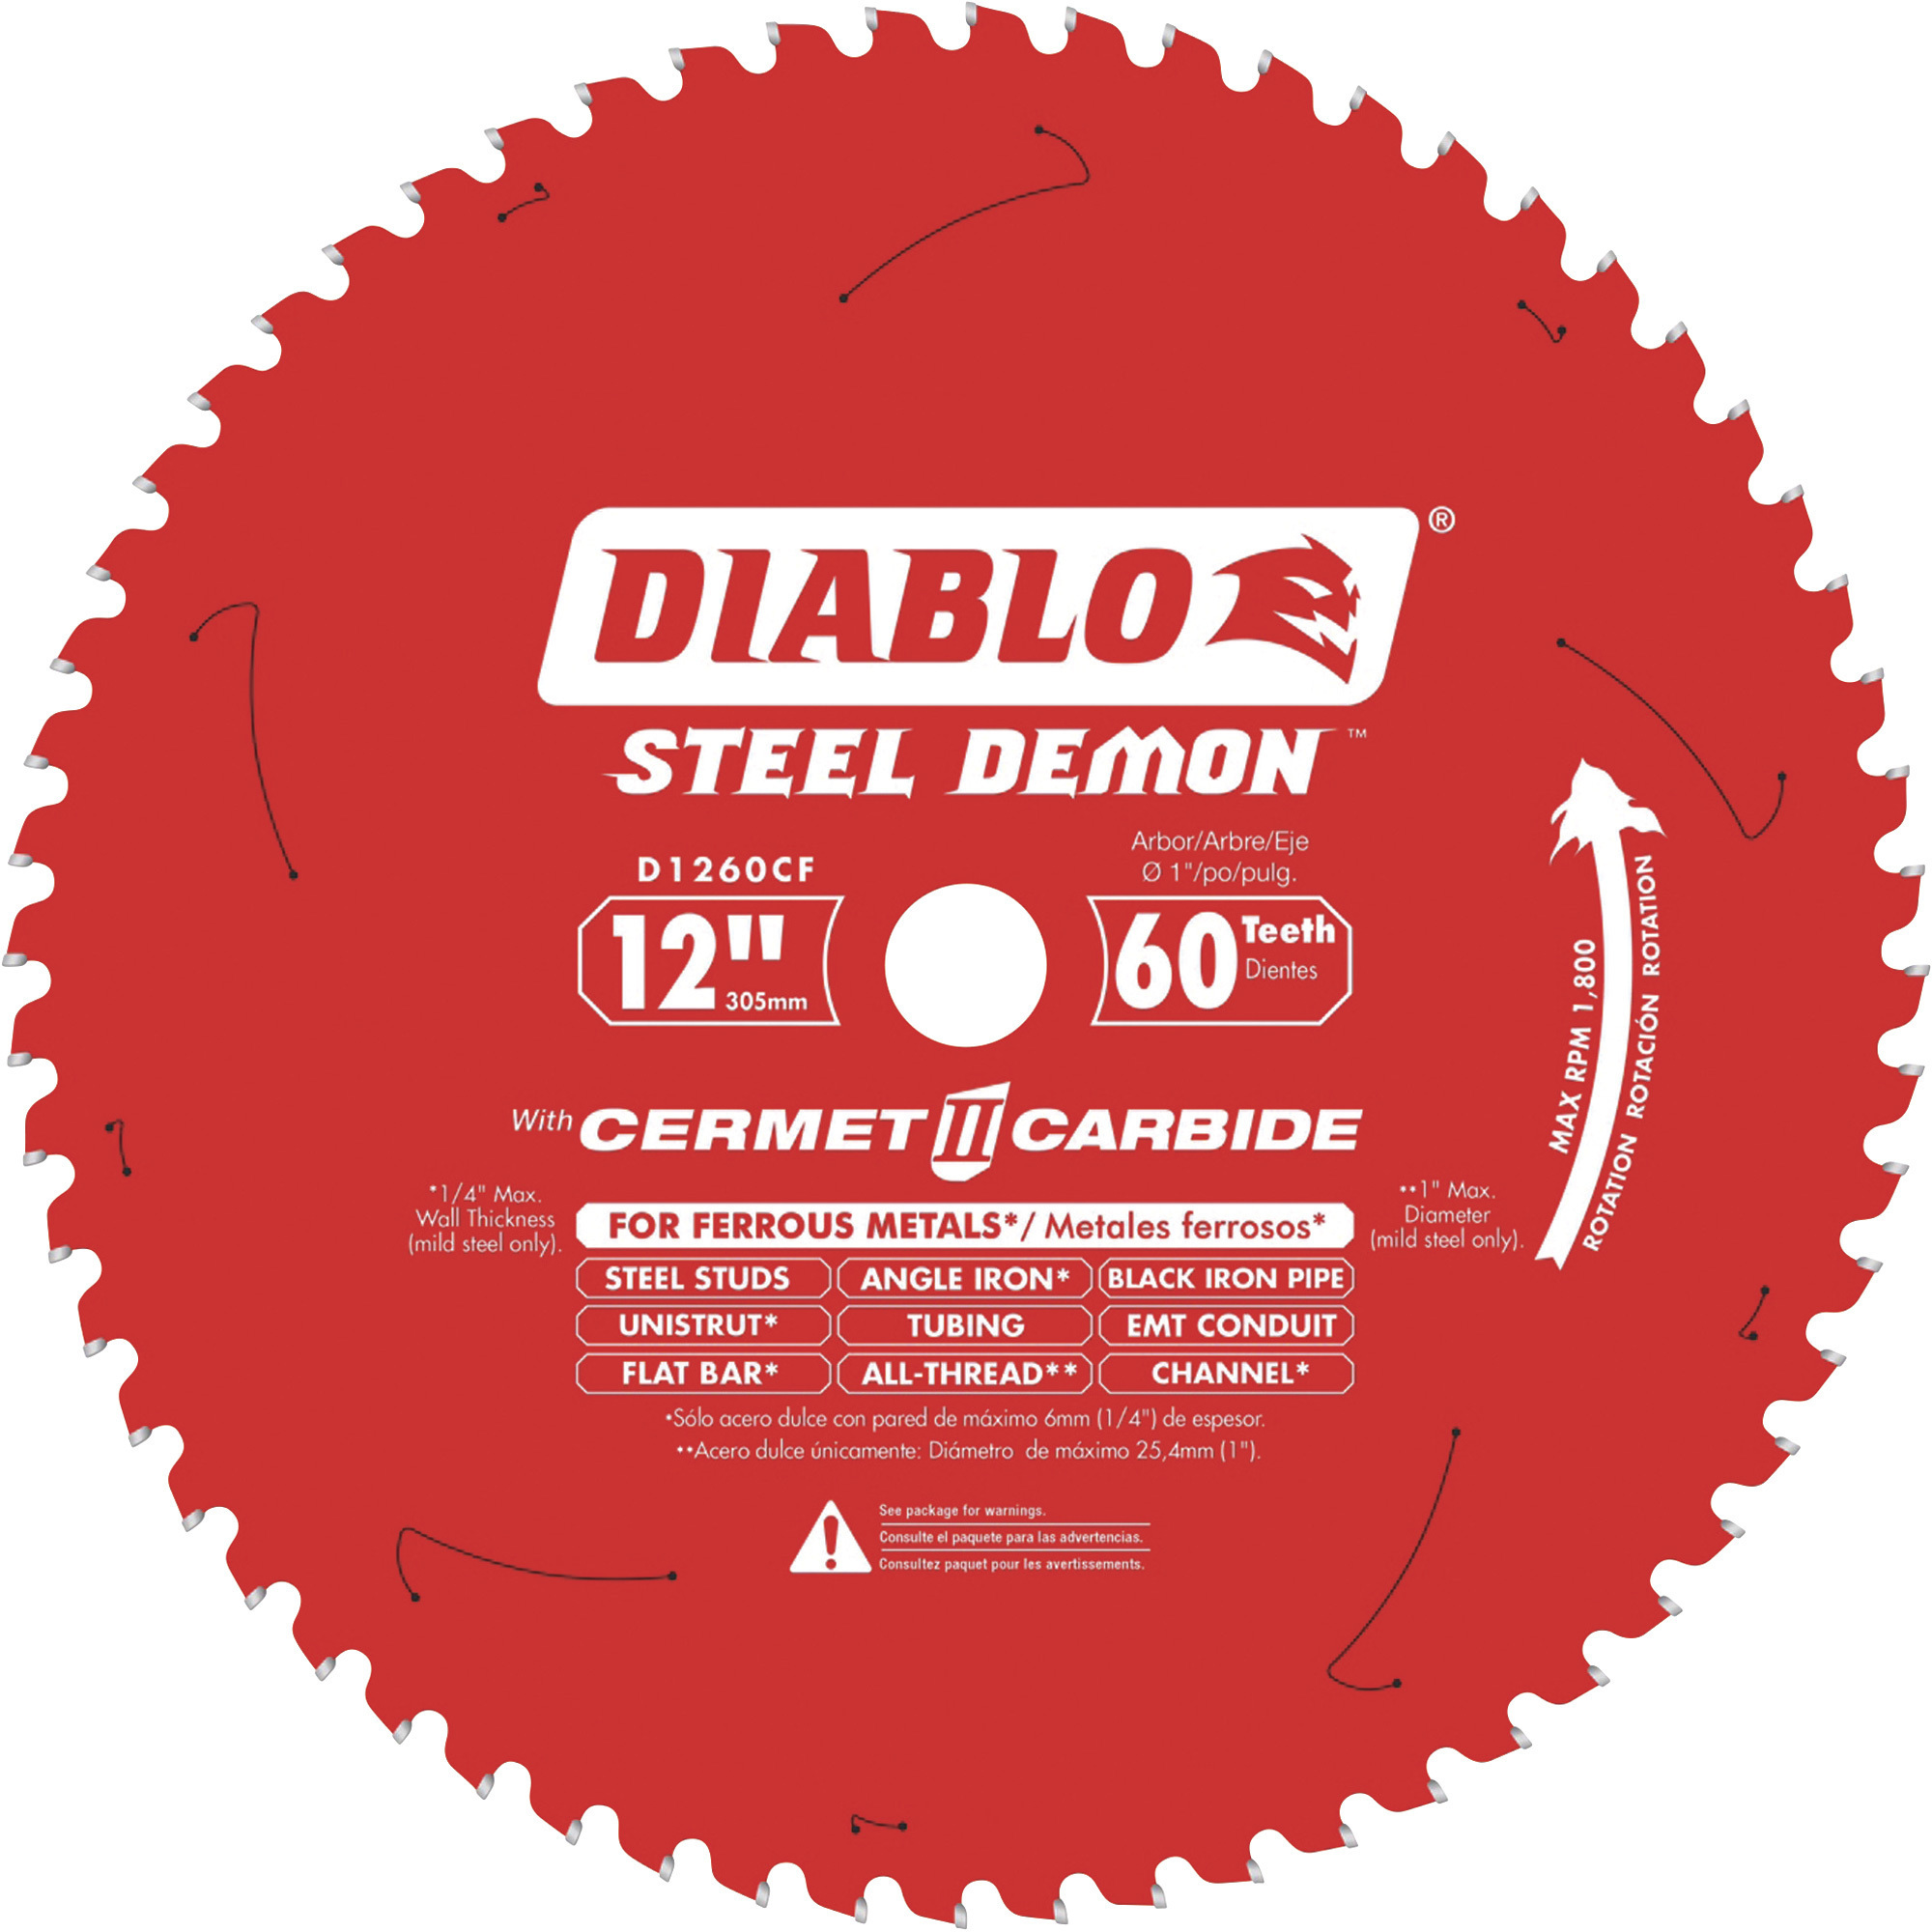 Diablo Steel Demon Cermet II Carbide Metal Cutting Circular Saw Blade, 12Inch, 60 Tooth, Model D1260CF